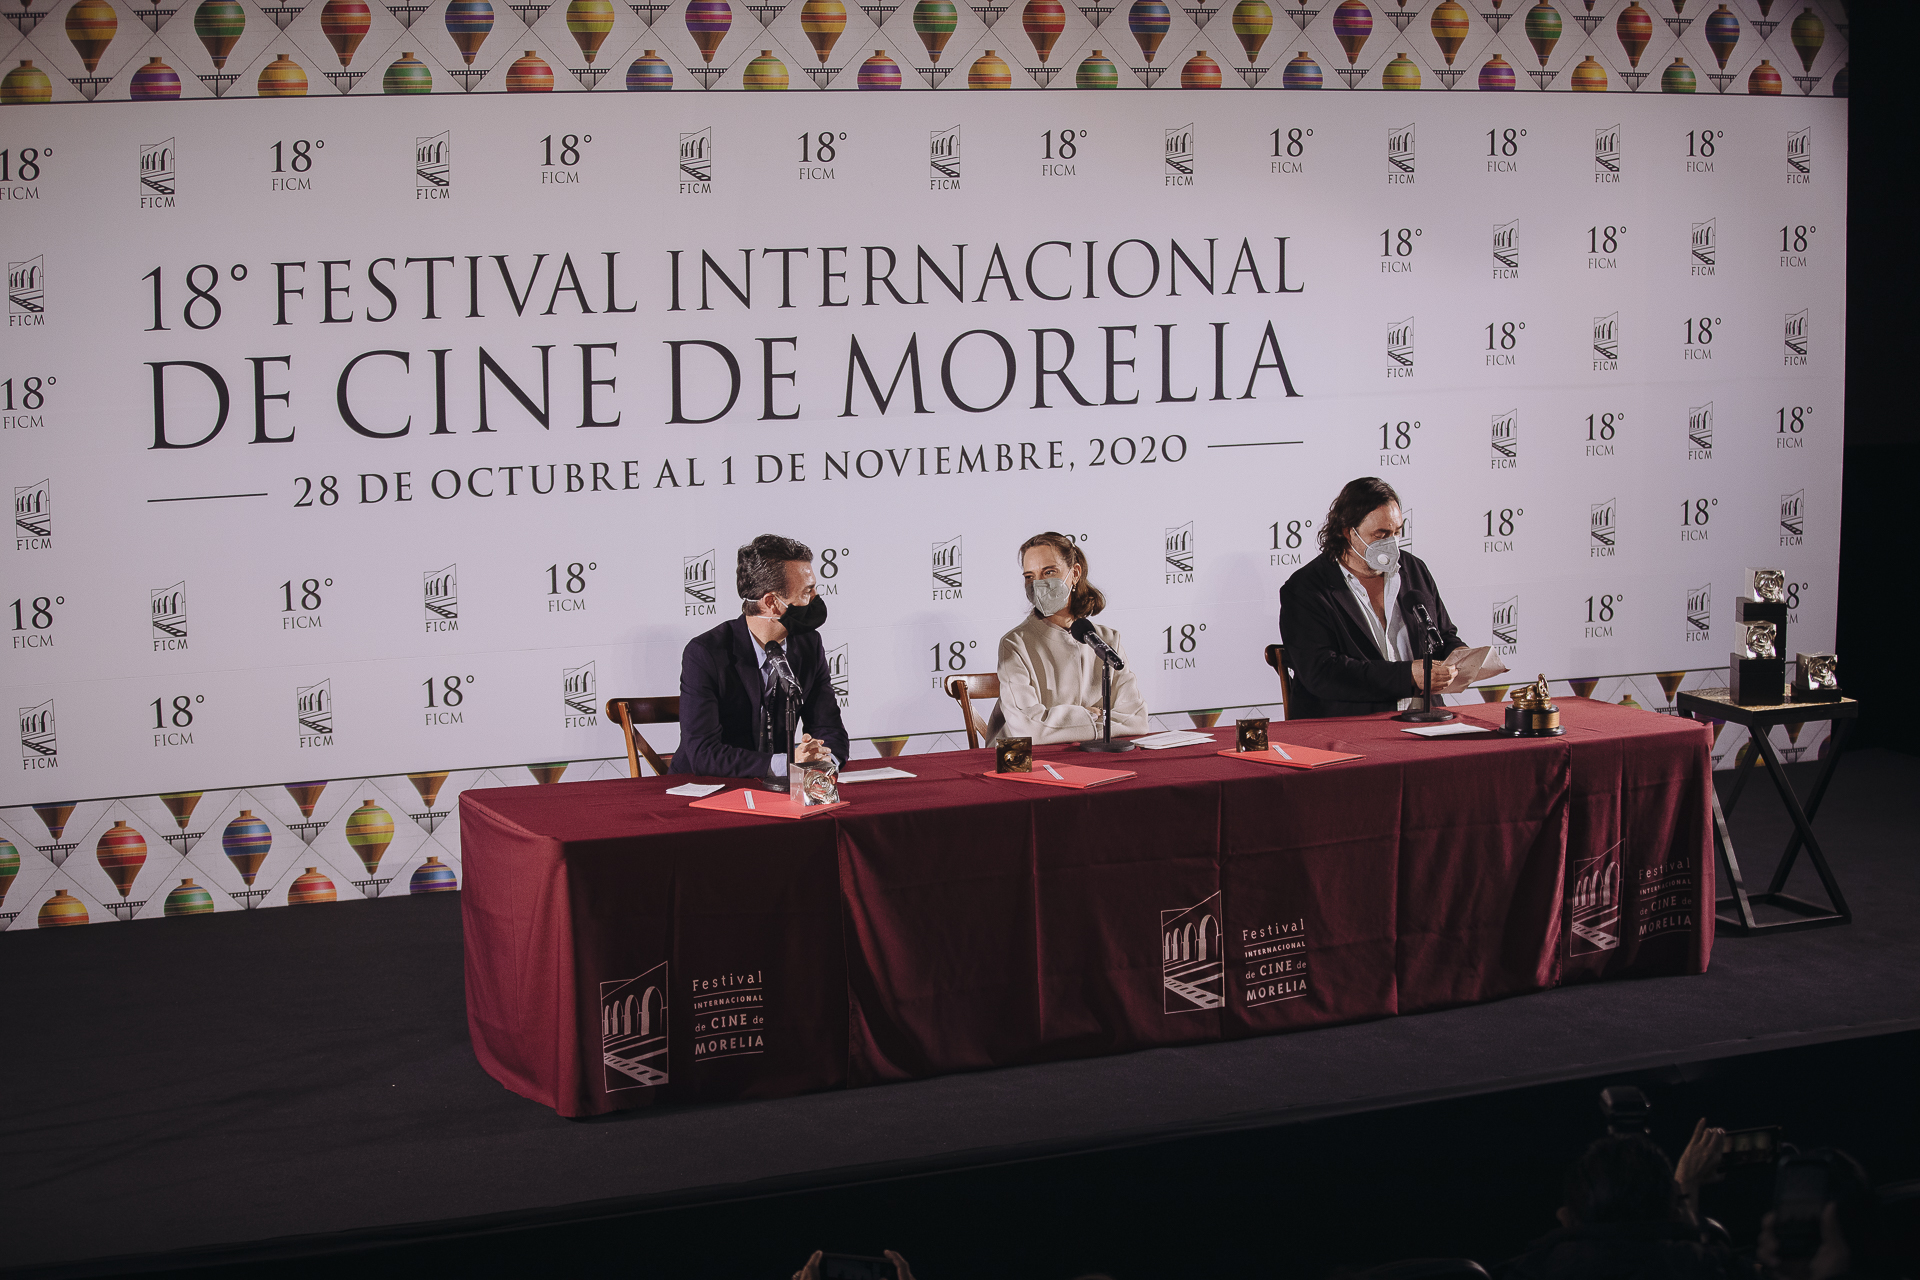 Click to download the program - Festival Internacional de Cinema